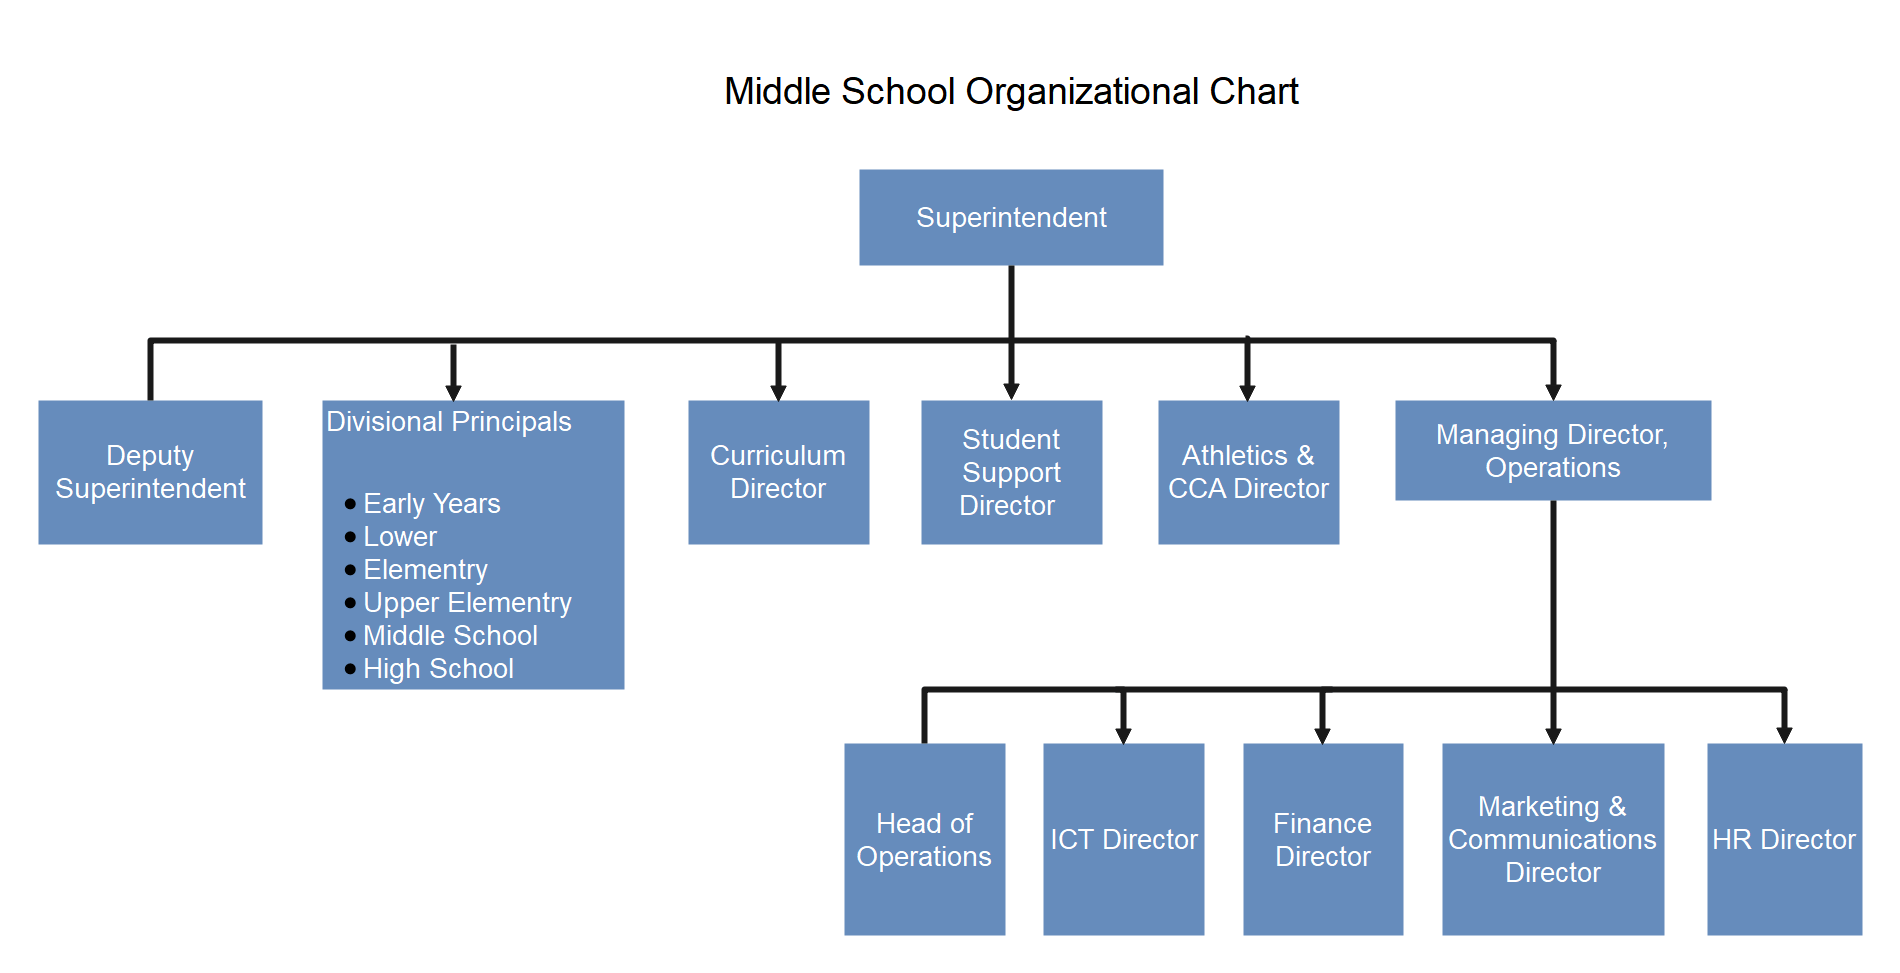 Middle School Organizational Chart